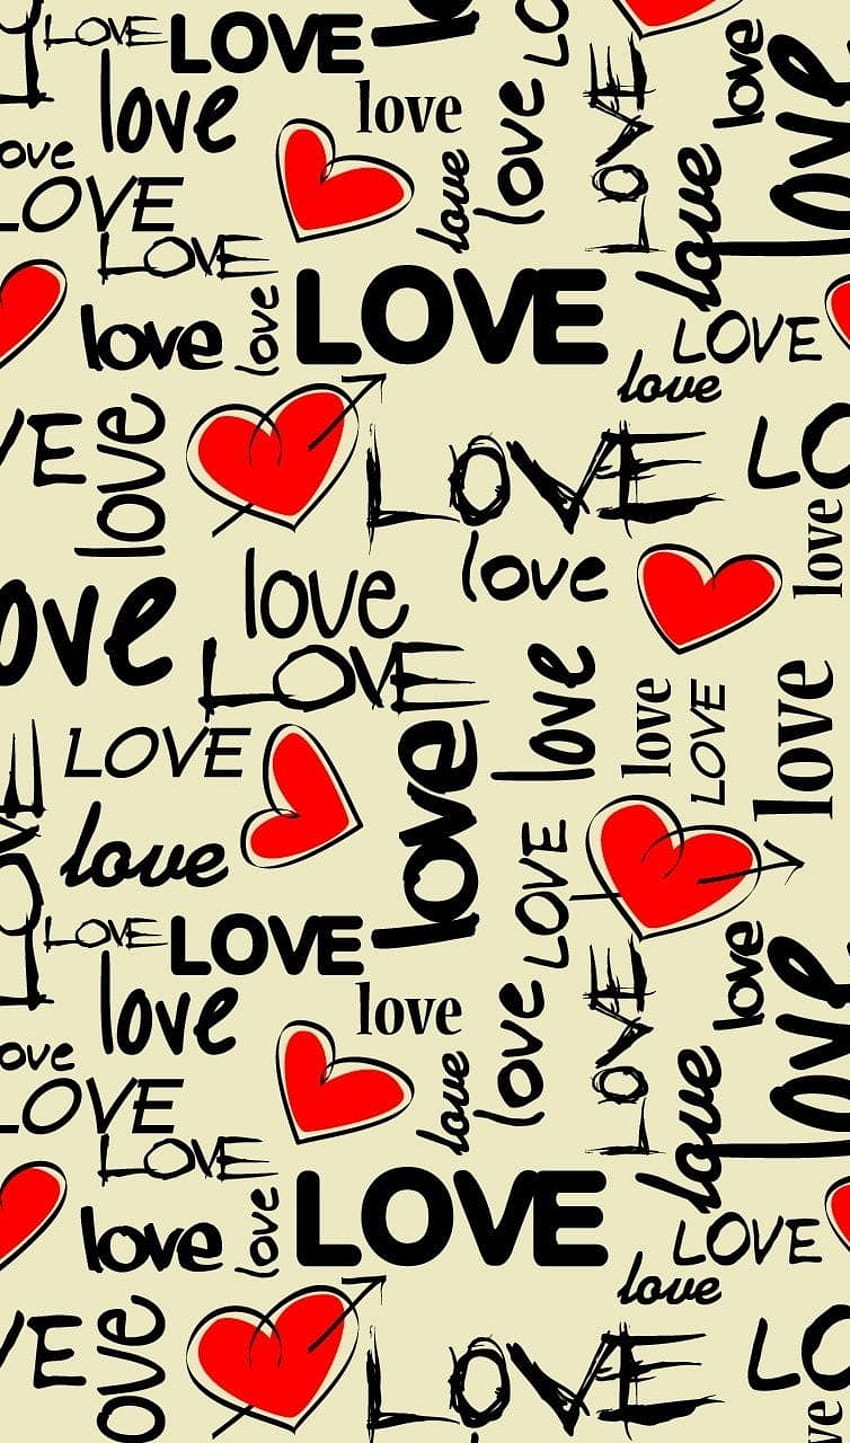 Aesthetic valentines day love text illustration art texture ...